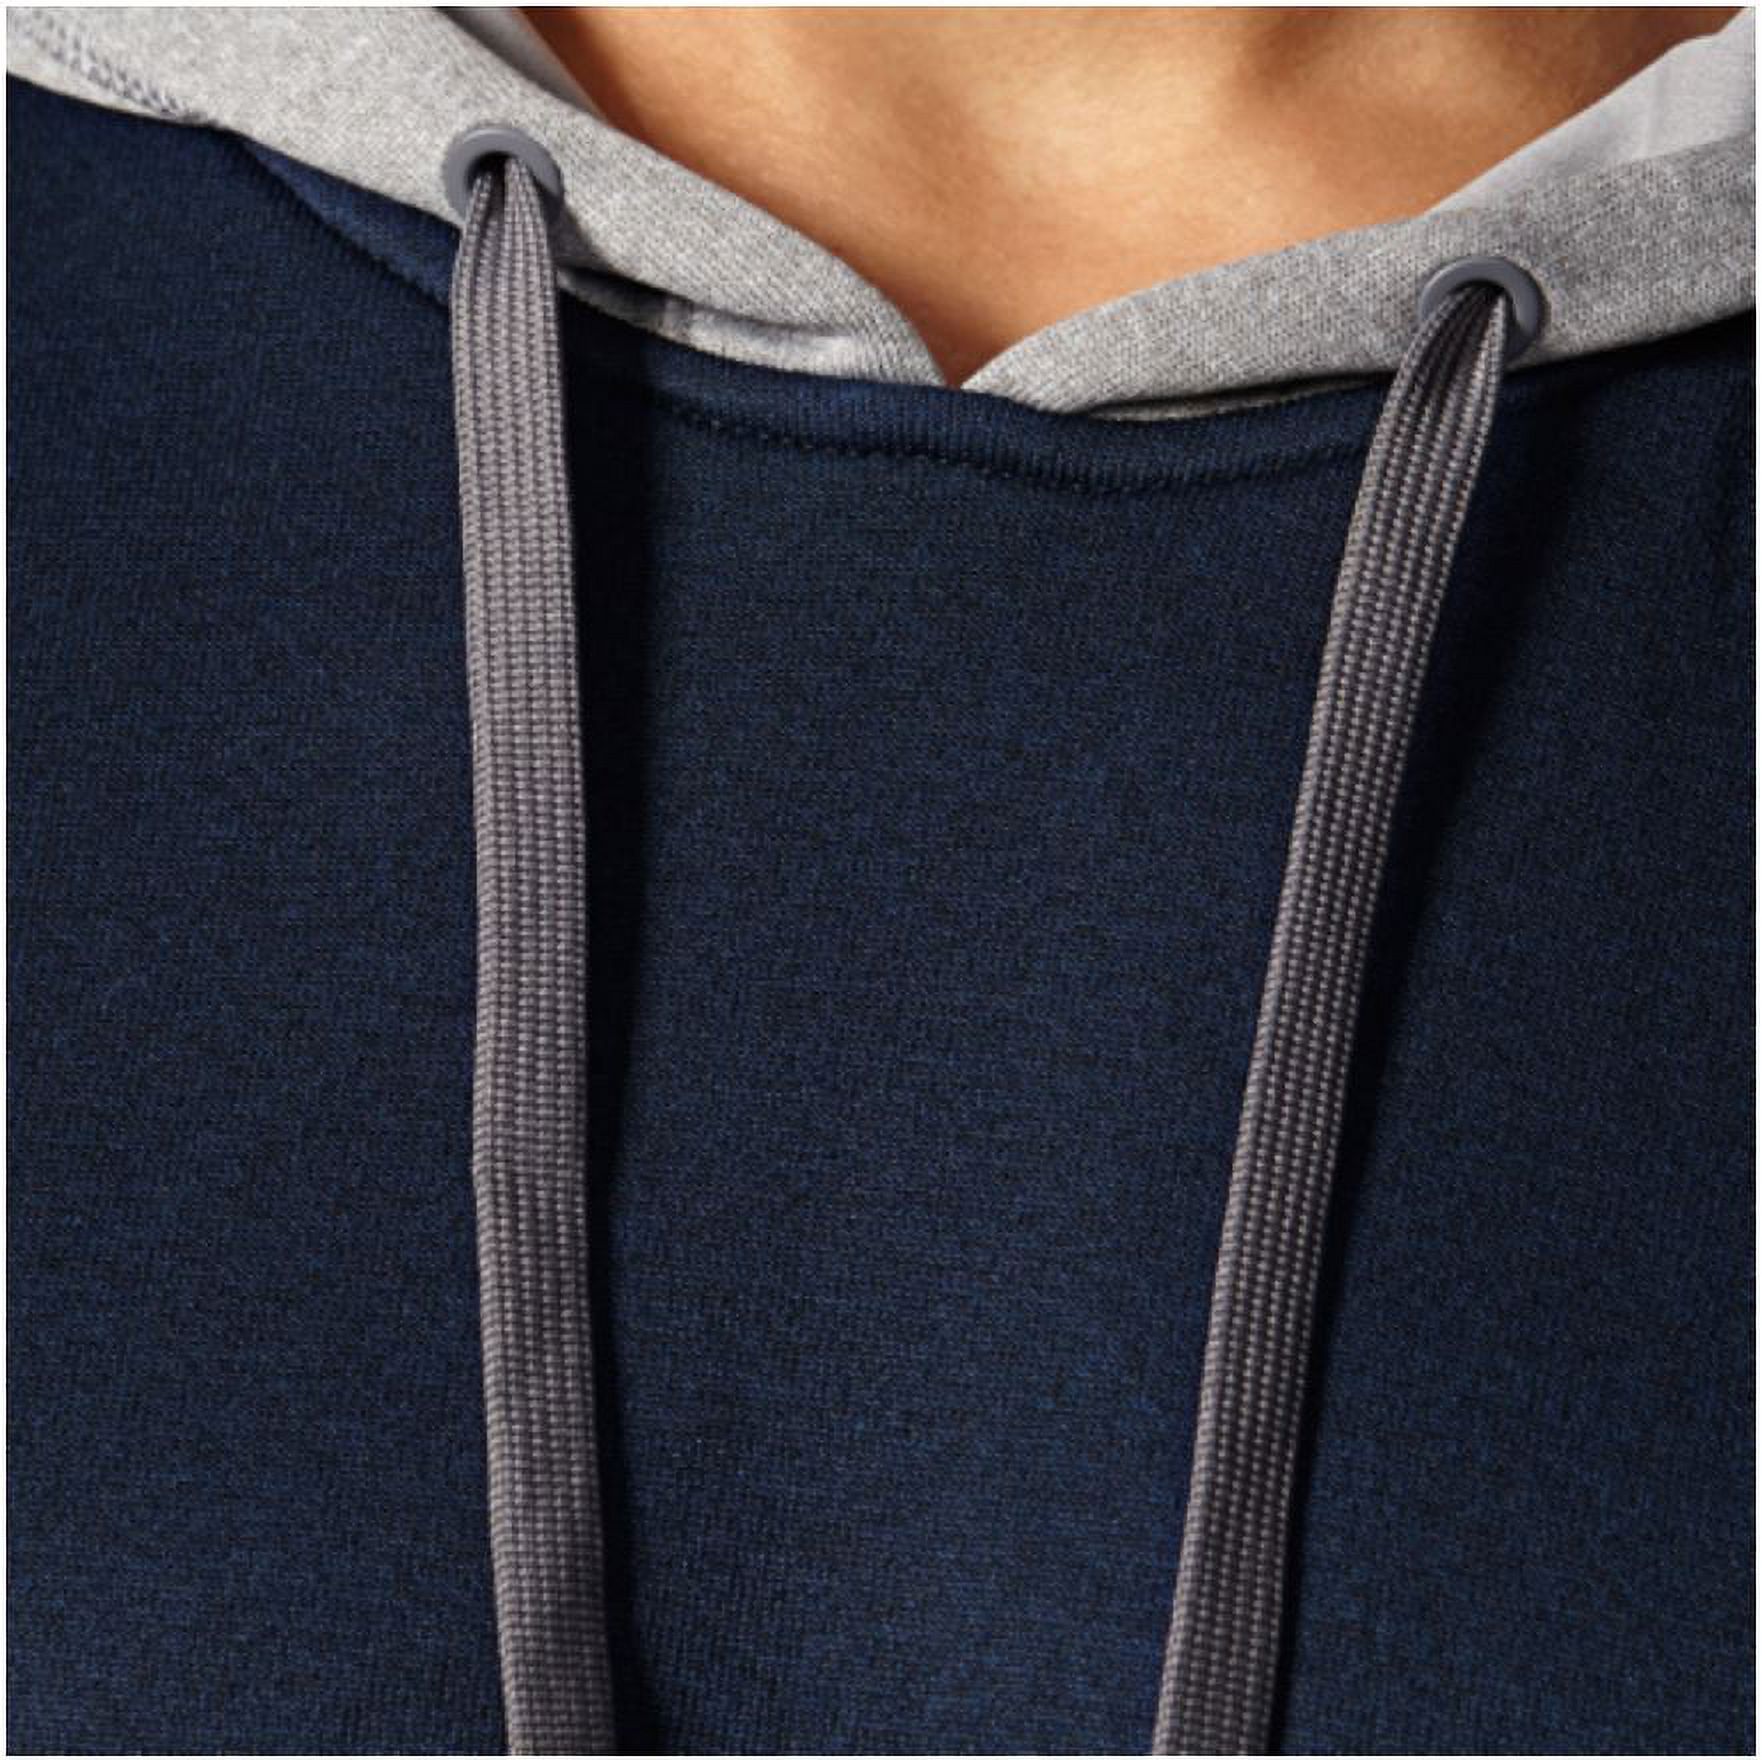 Adidas Mens Climawarm Tech Fleece Pullover Hoodie Sweatshirt - image 3 of 4